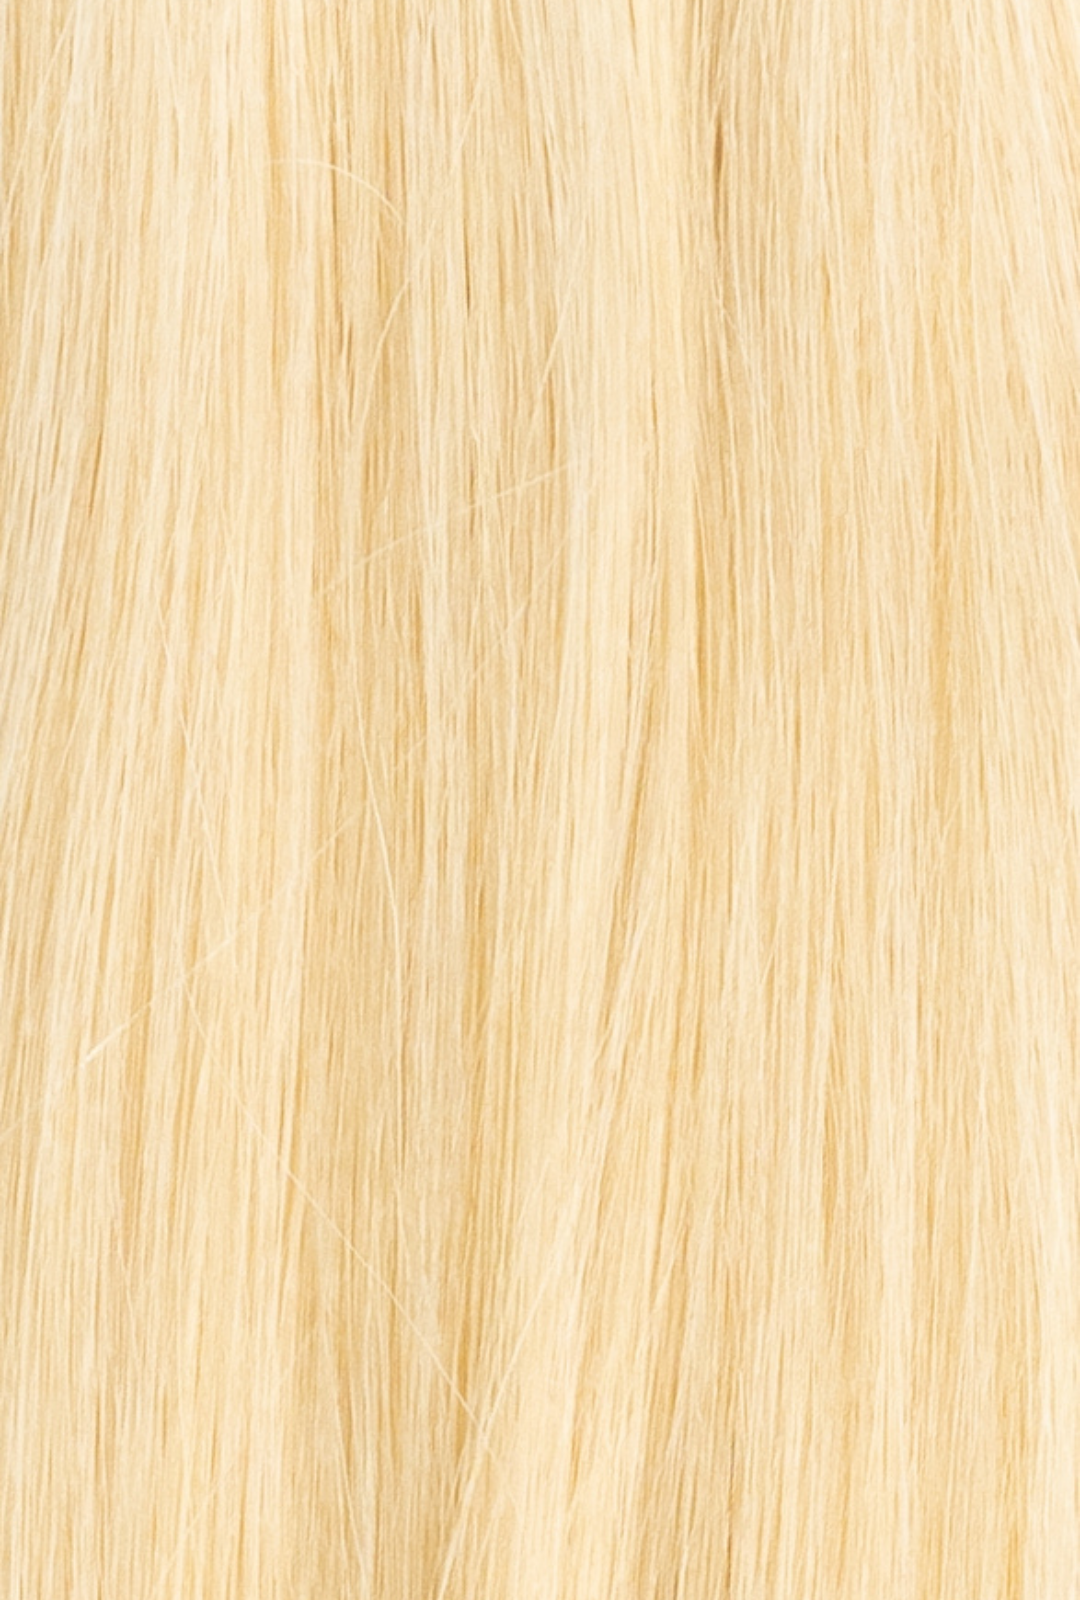 Laced Hair Keratin Bond Extensions #613